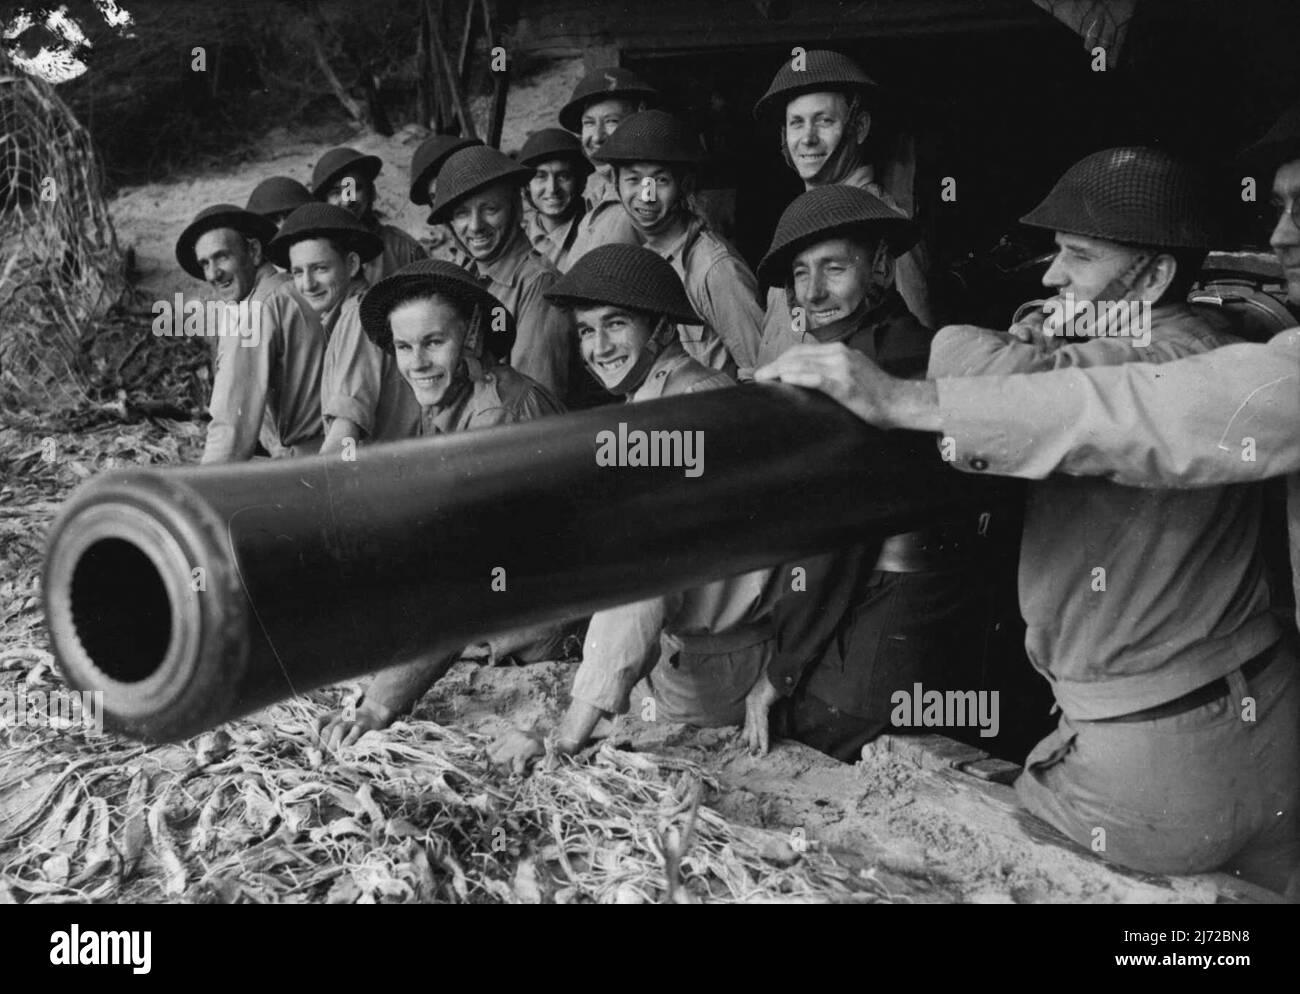 V.D.C. In Aust. Group of V.D.C. who man (part time) coastal gun off duty rest beside their gun. October 11, 1943. (Photo by H. Rodda). Stock Photo